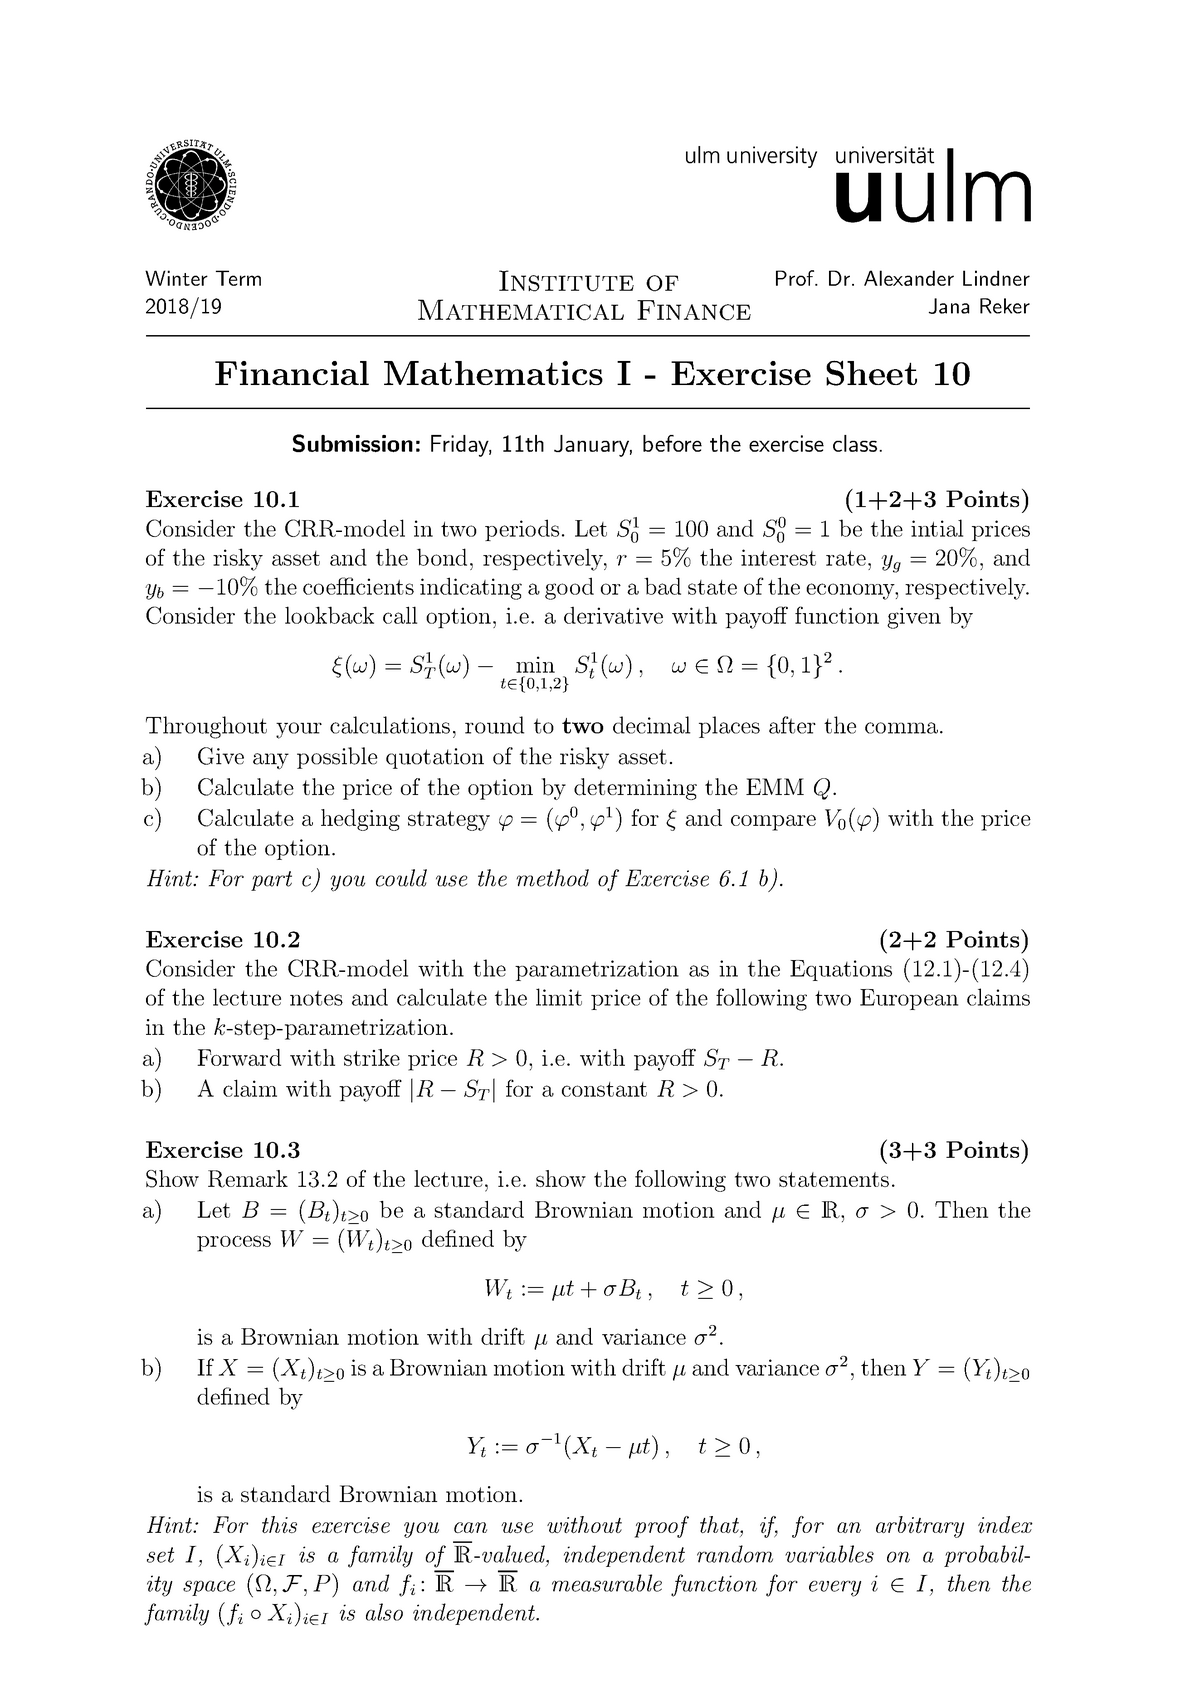 Exercise Sheet 10 Questions Financial Mathematics 1 Math3001 010 Studocu